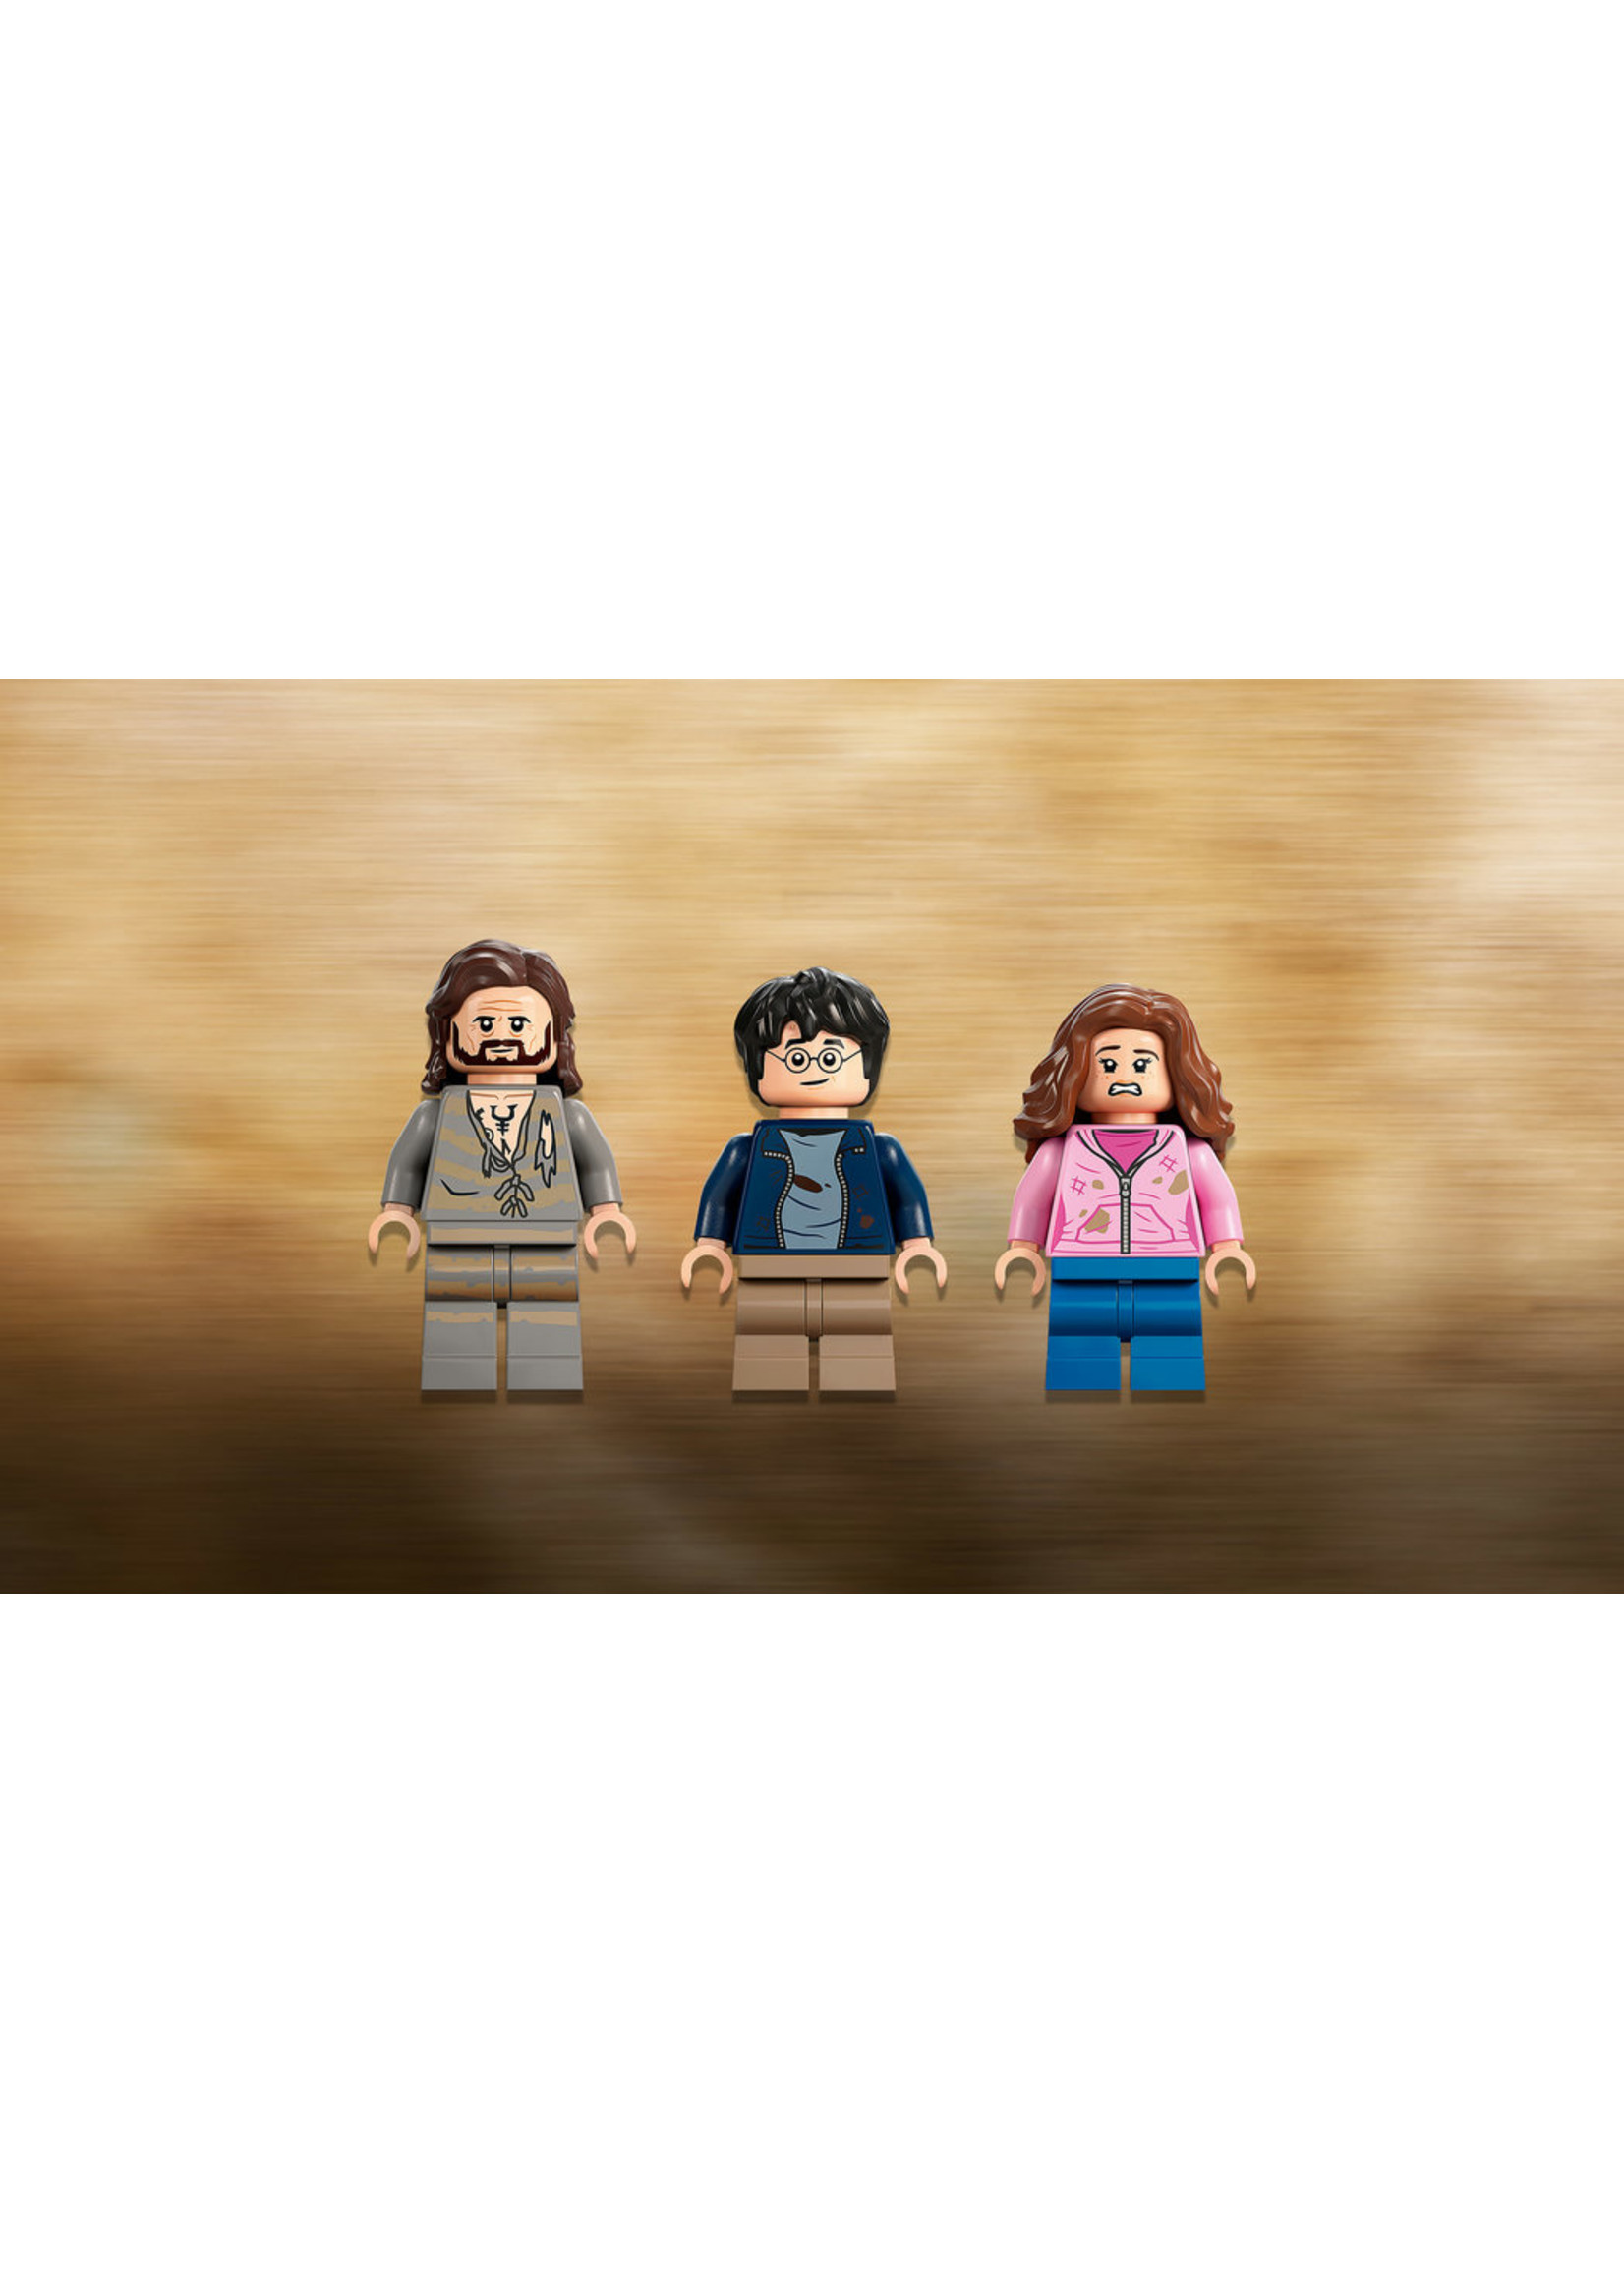 LEGO 76401 - Hogwarts Courtyard Sirius's Rescue